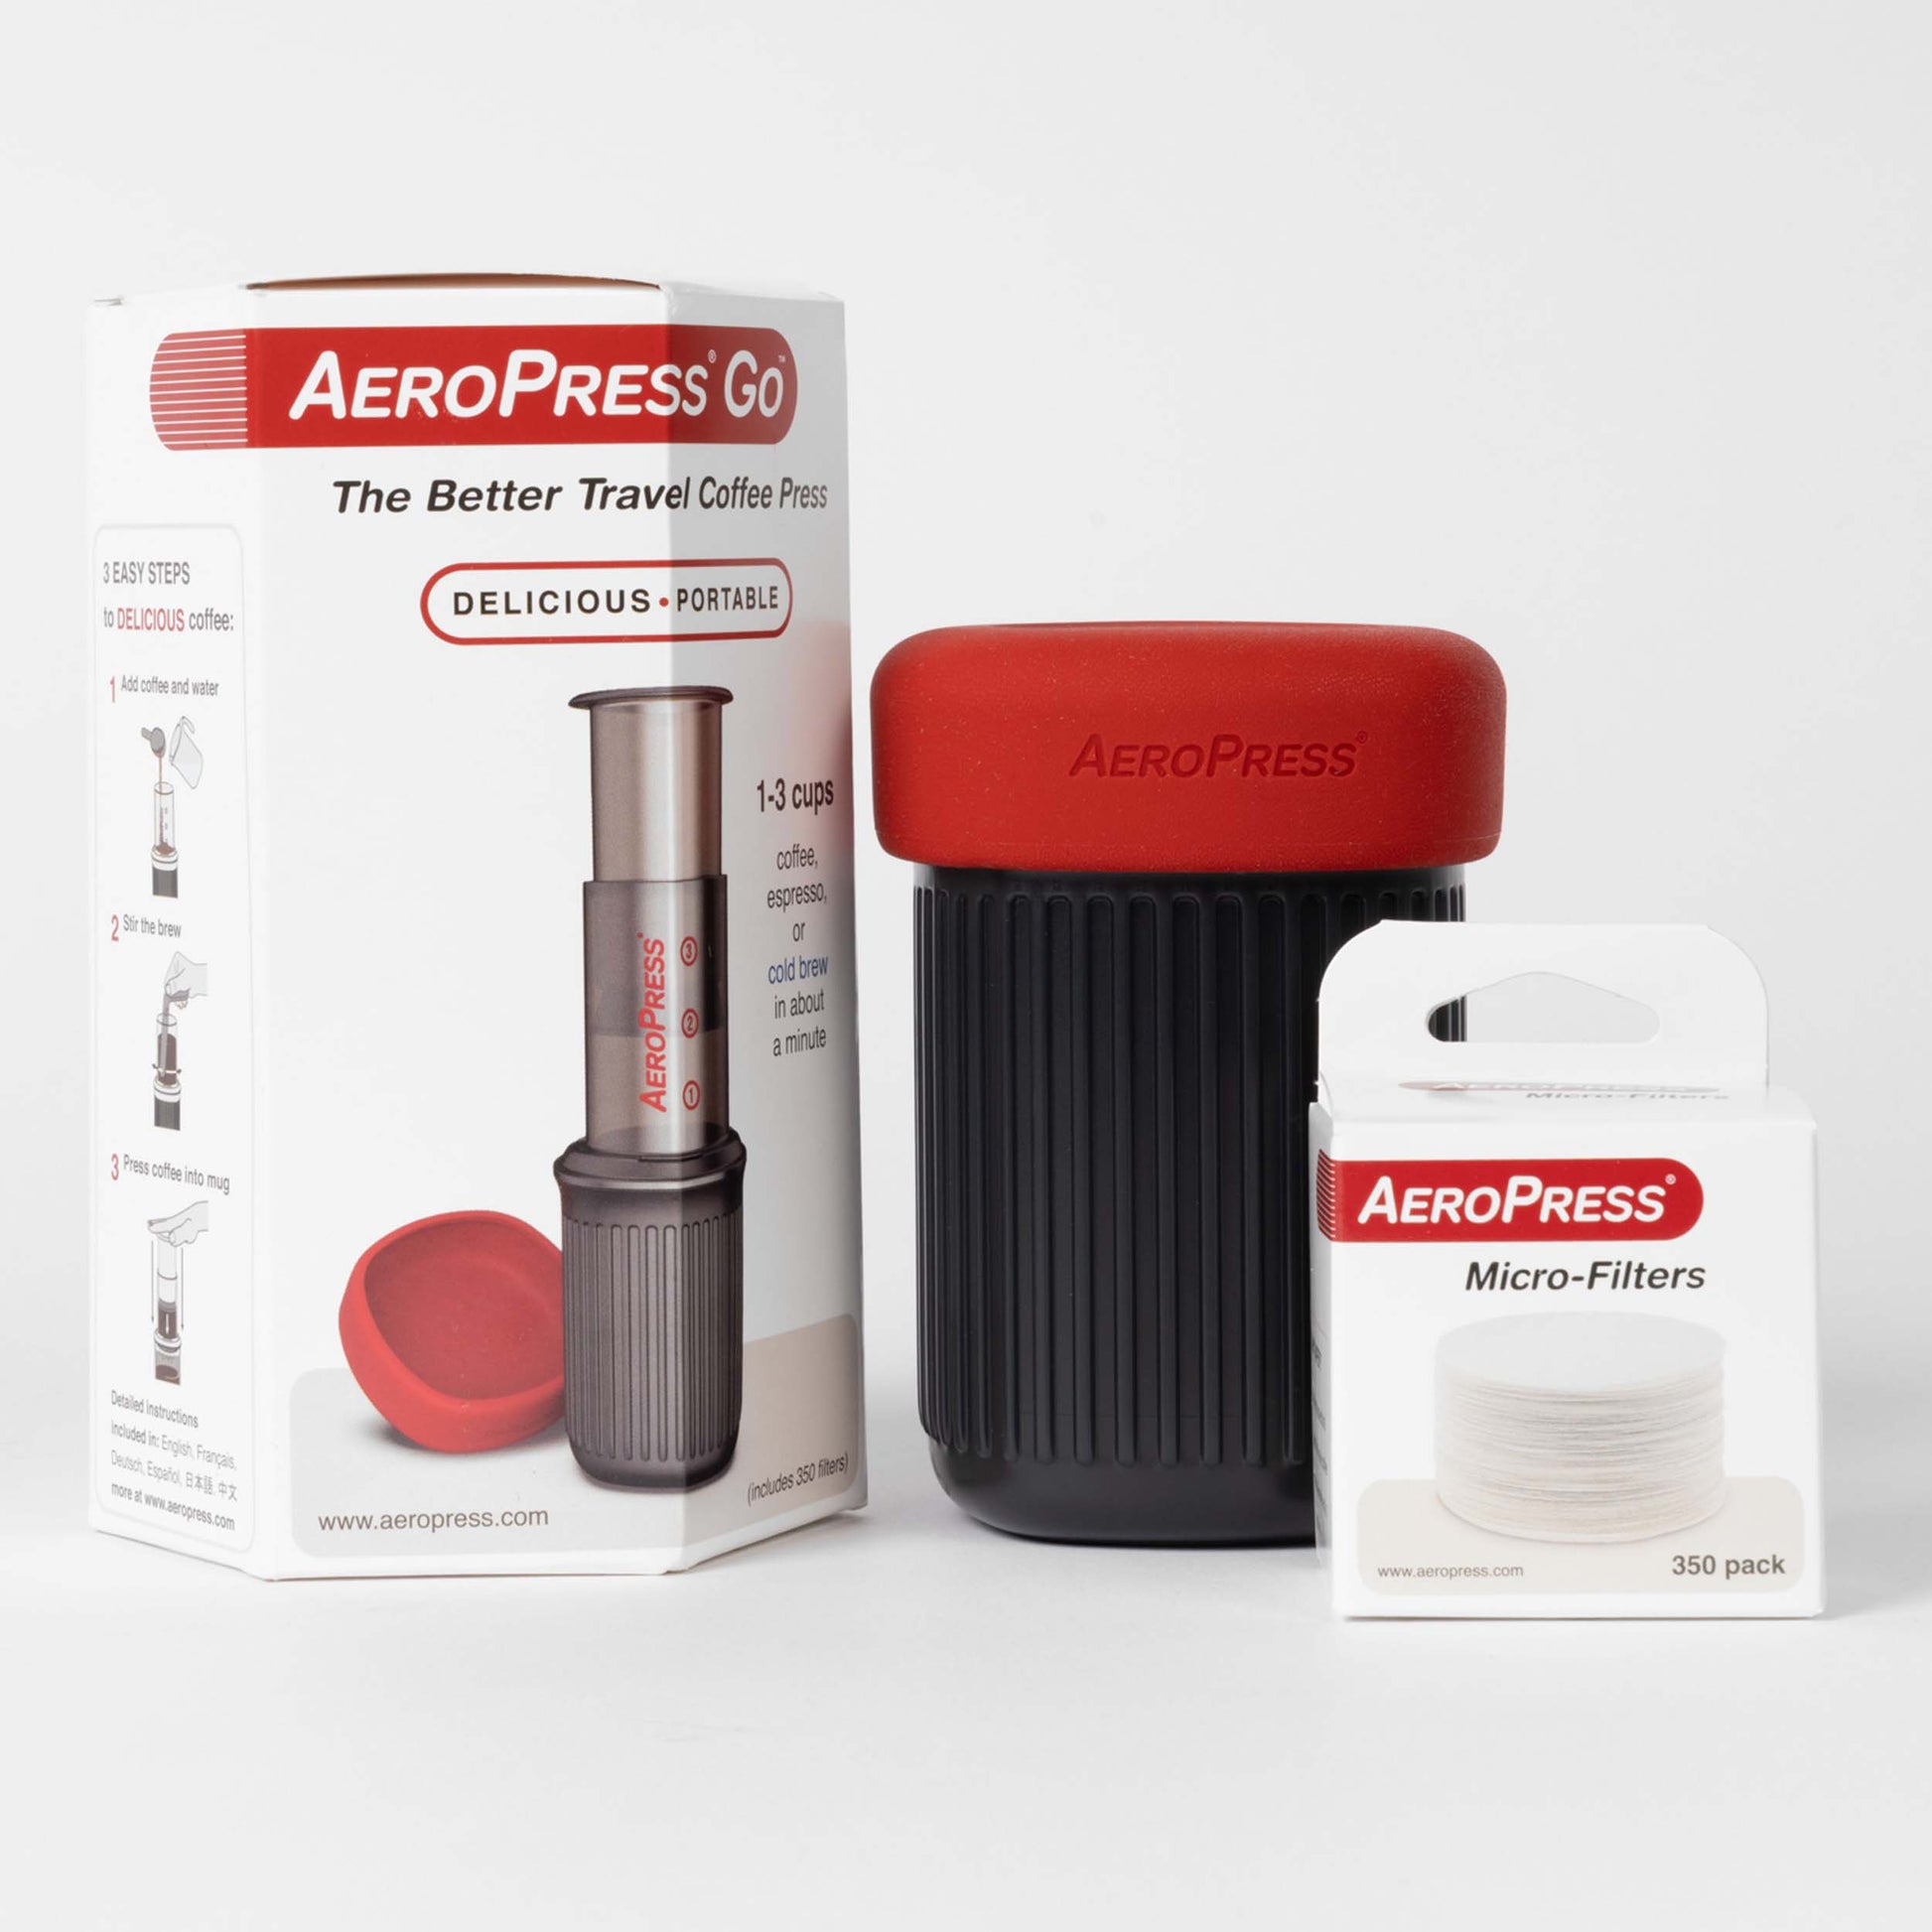 AeroPress Go Portable Travel Coffee Press, 1-3 Cups - Barbarossa Coffee